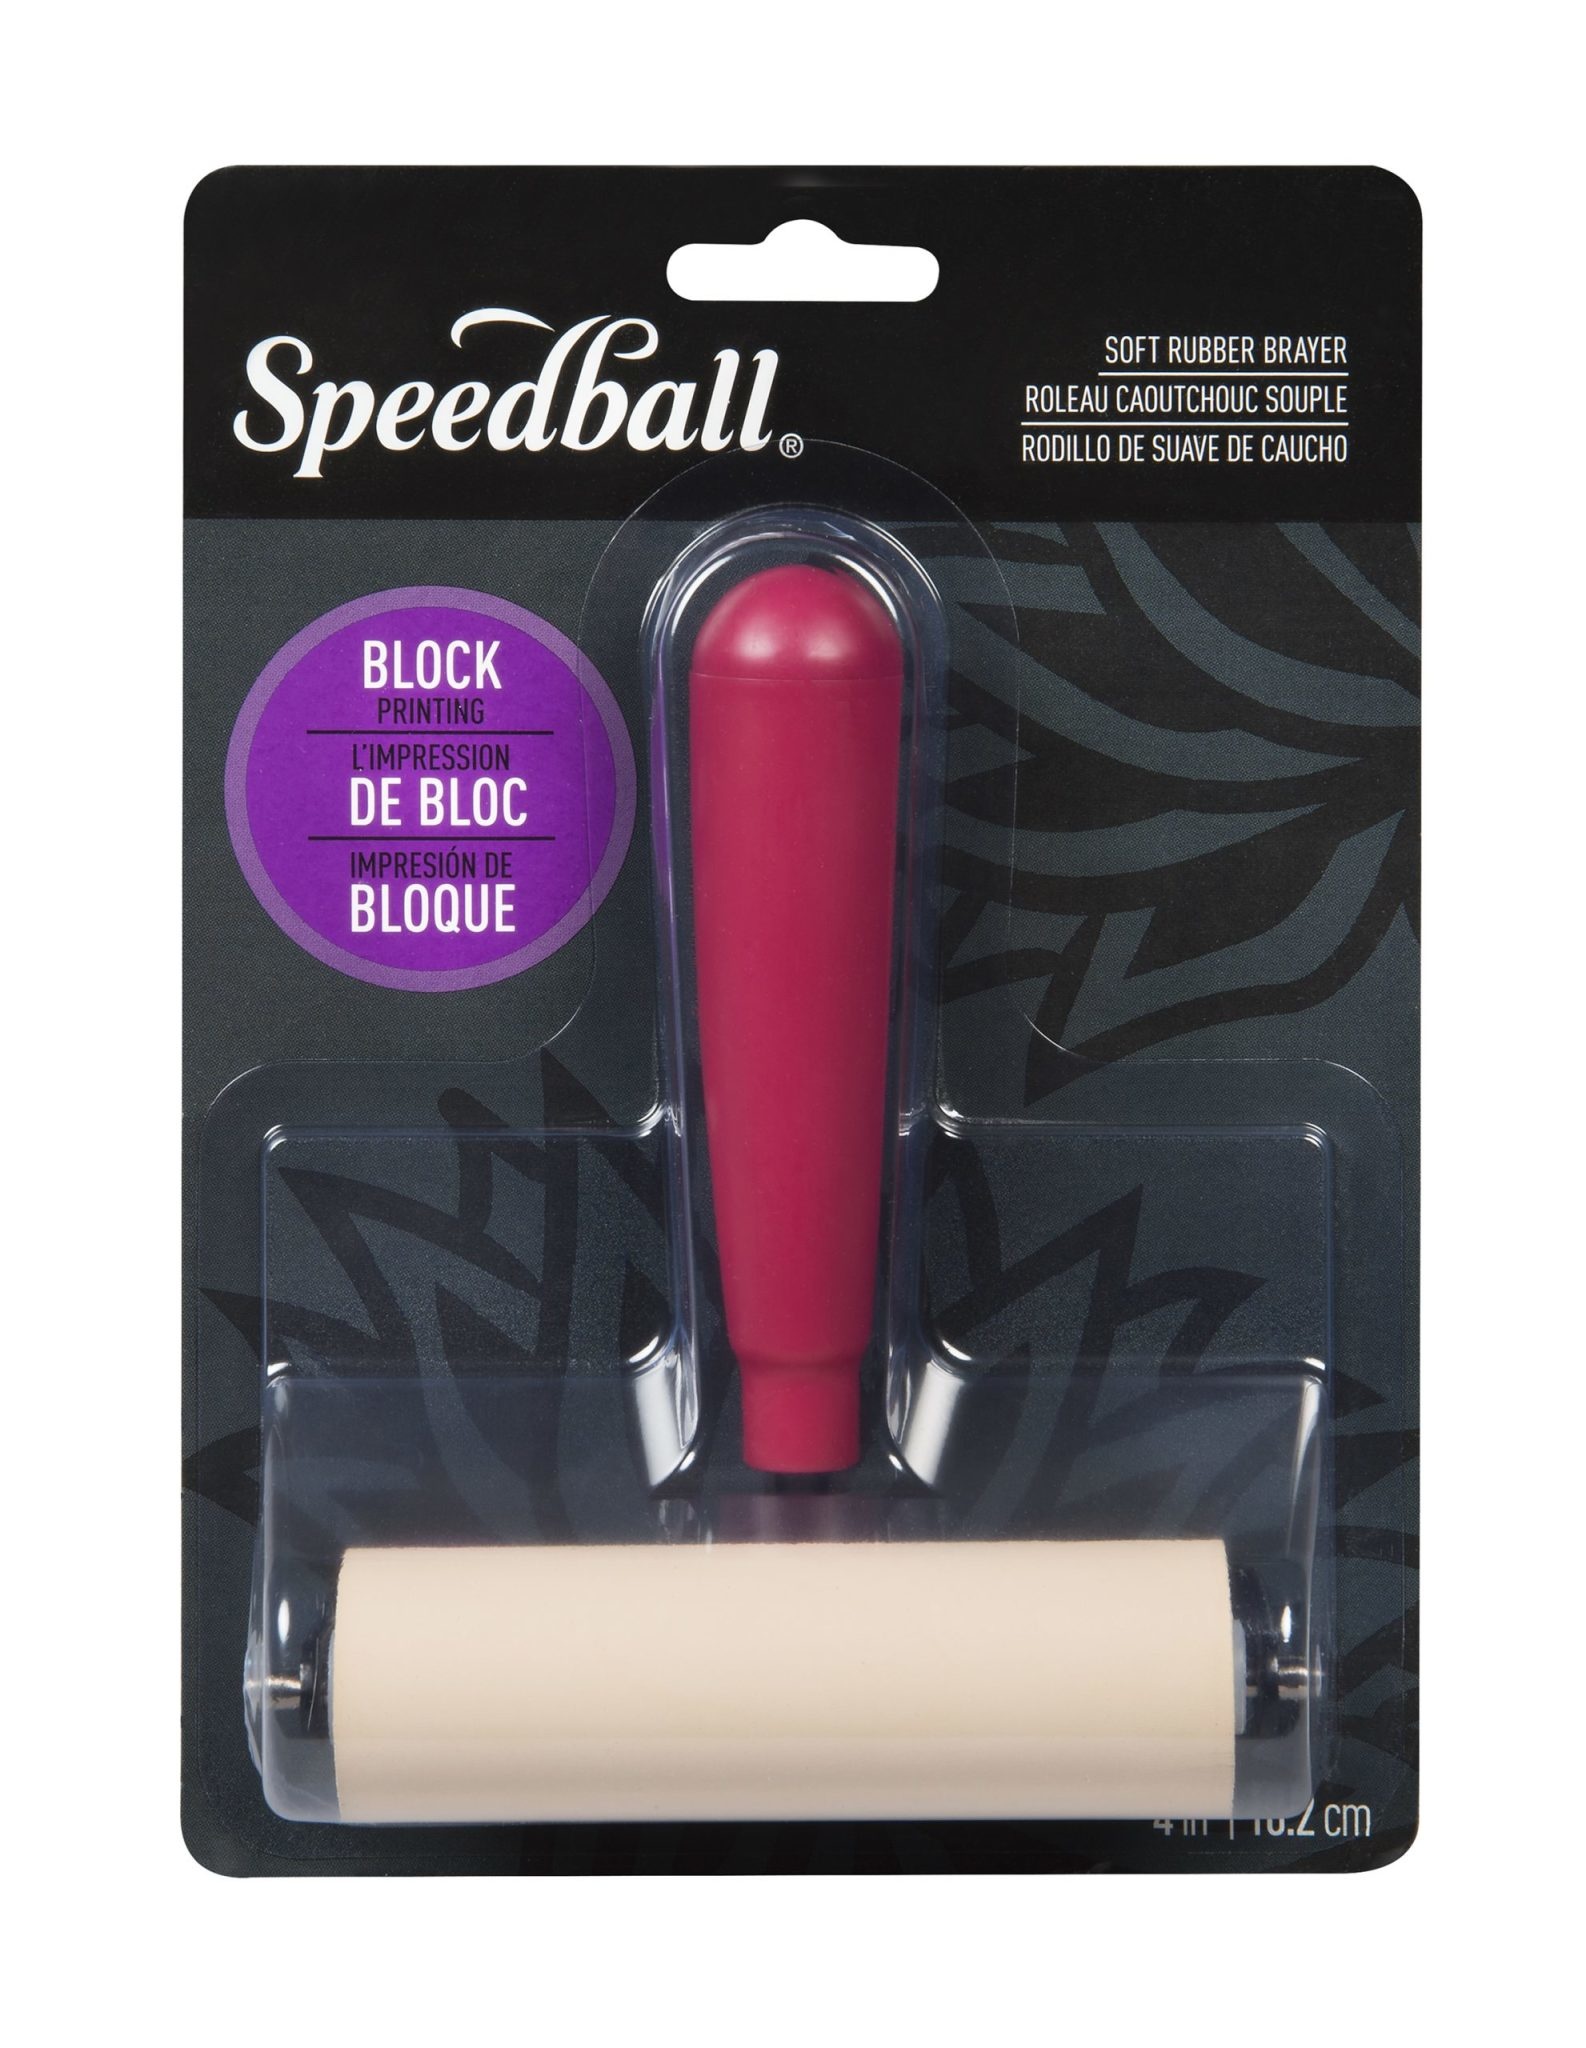 Speedball Brayer 2 Soft Rubber